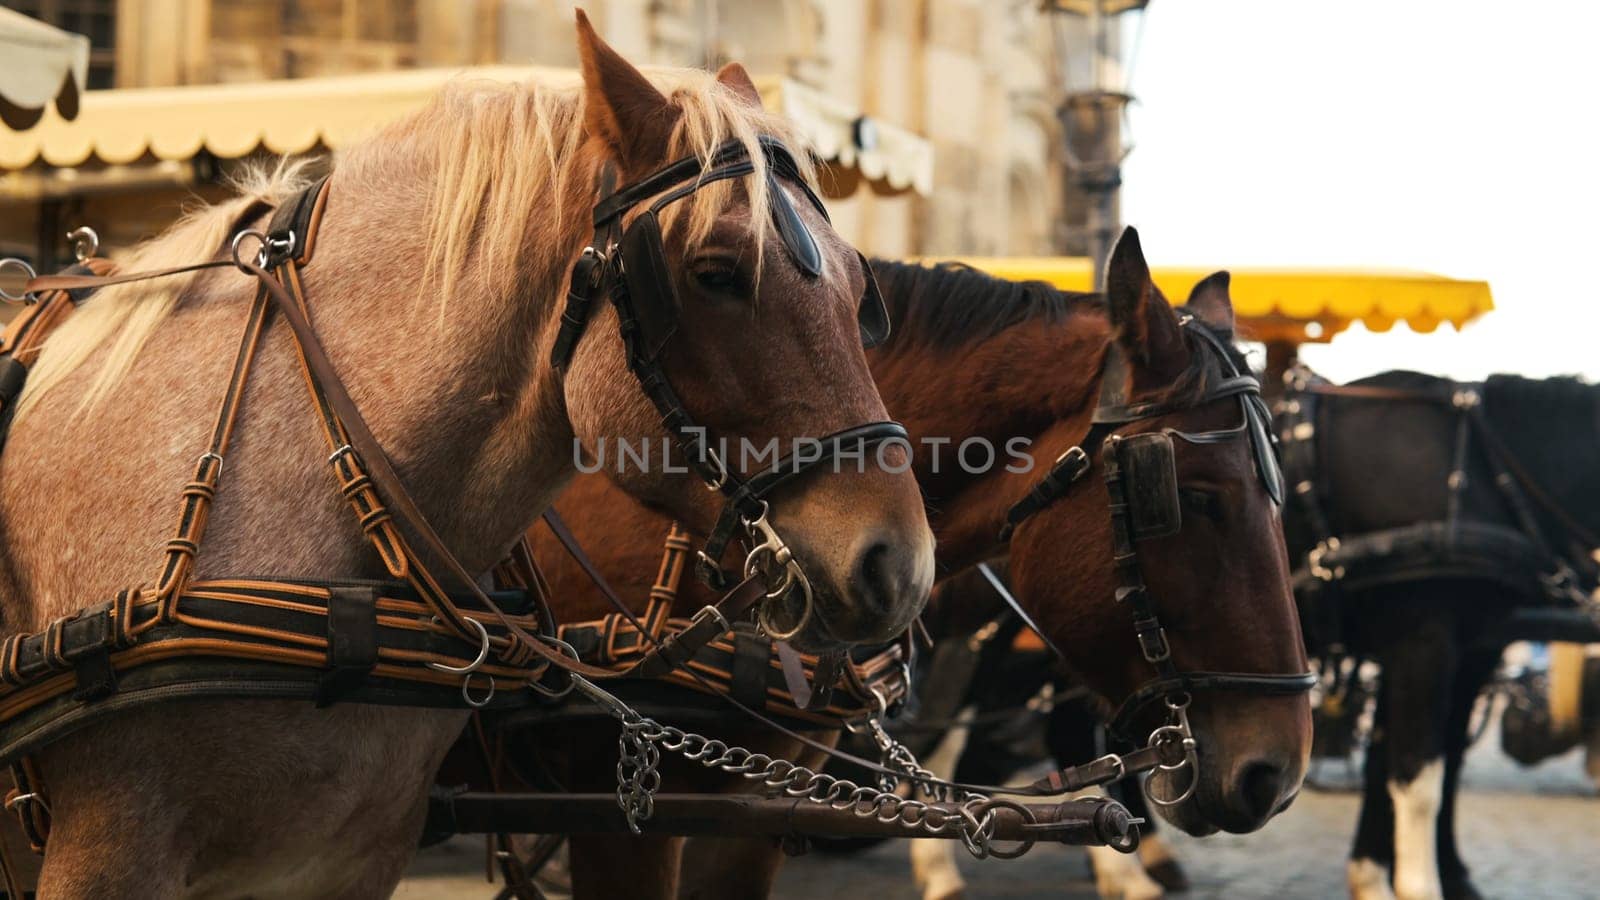 Horses In An Old European City Center by tan4ikk1